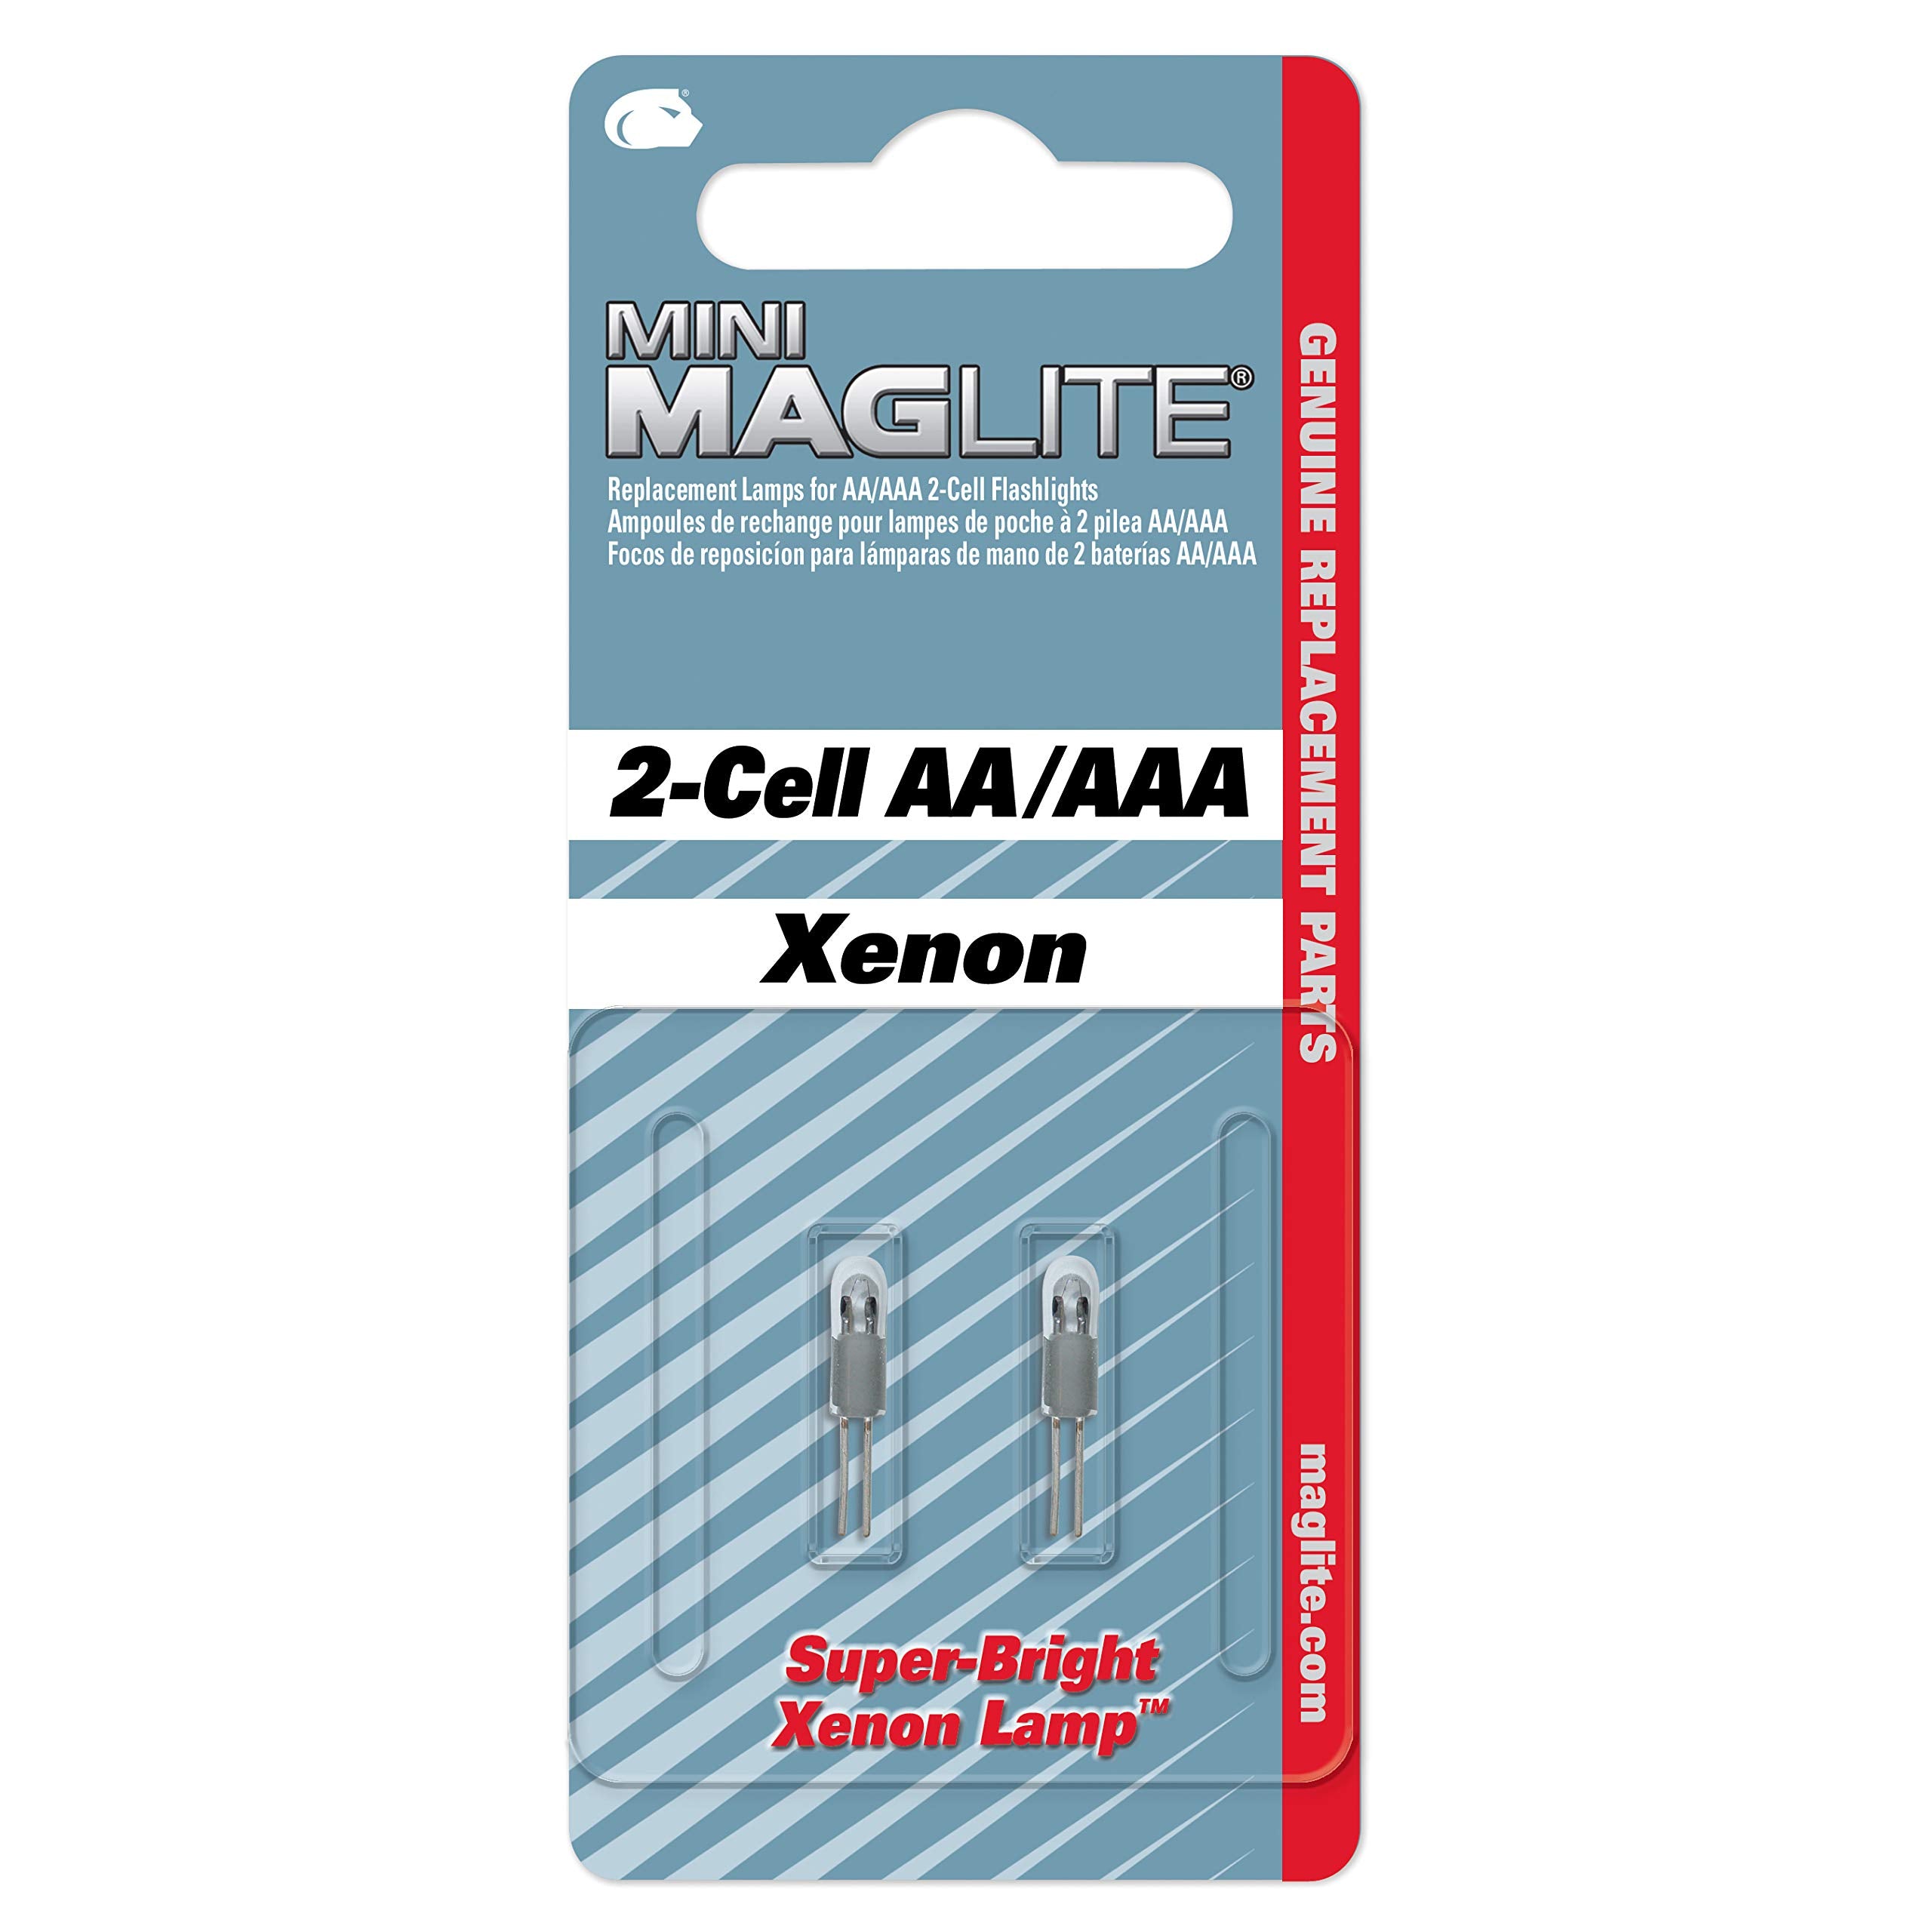 Maglite Mini Maglite AA Replacement Bulb Kit